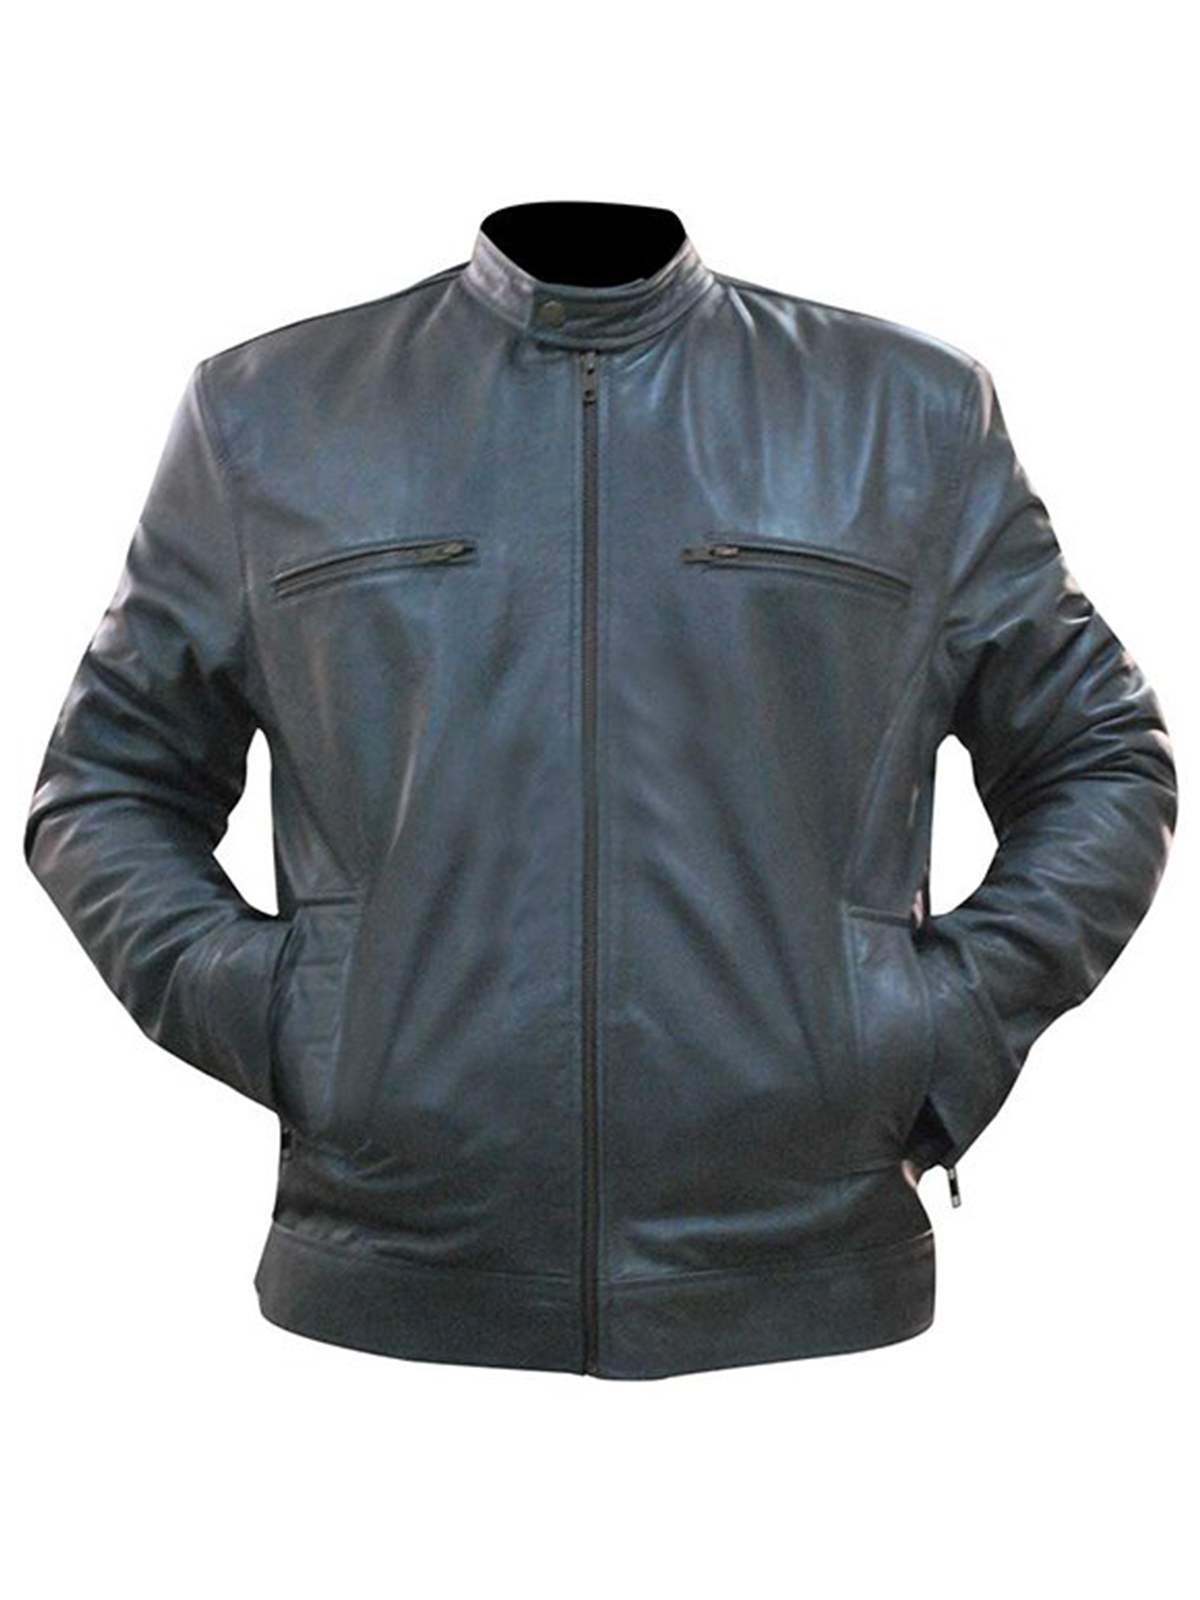 Jonathan David Good Grey Leather Jacket